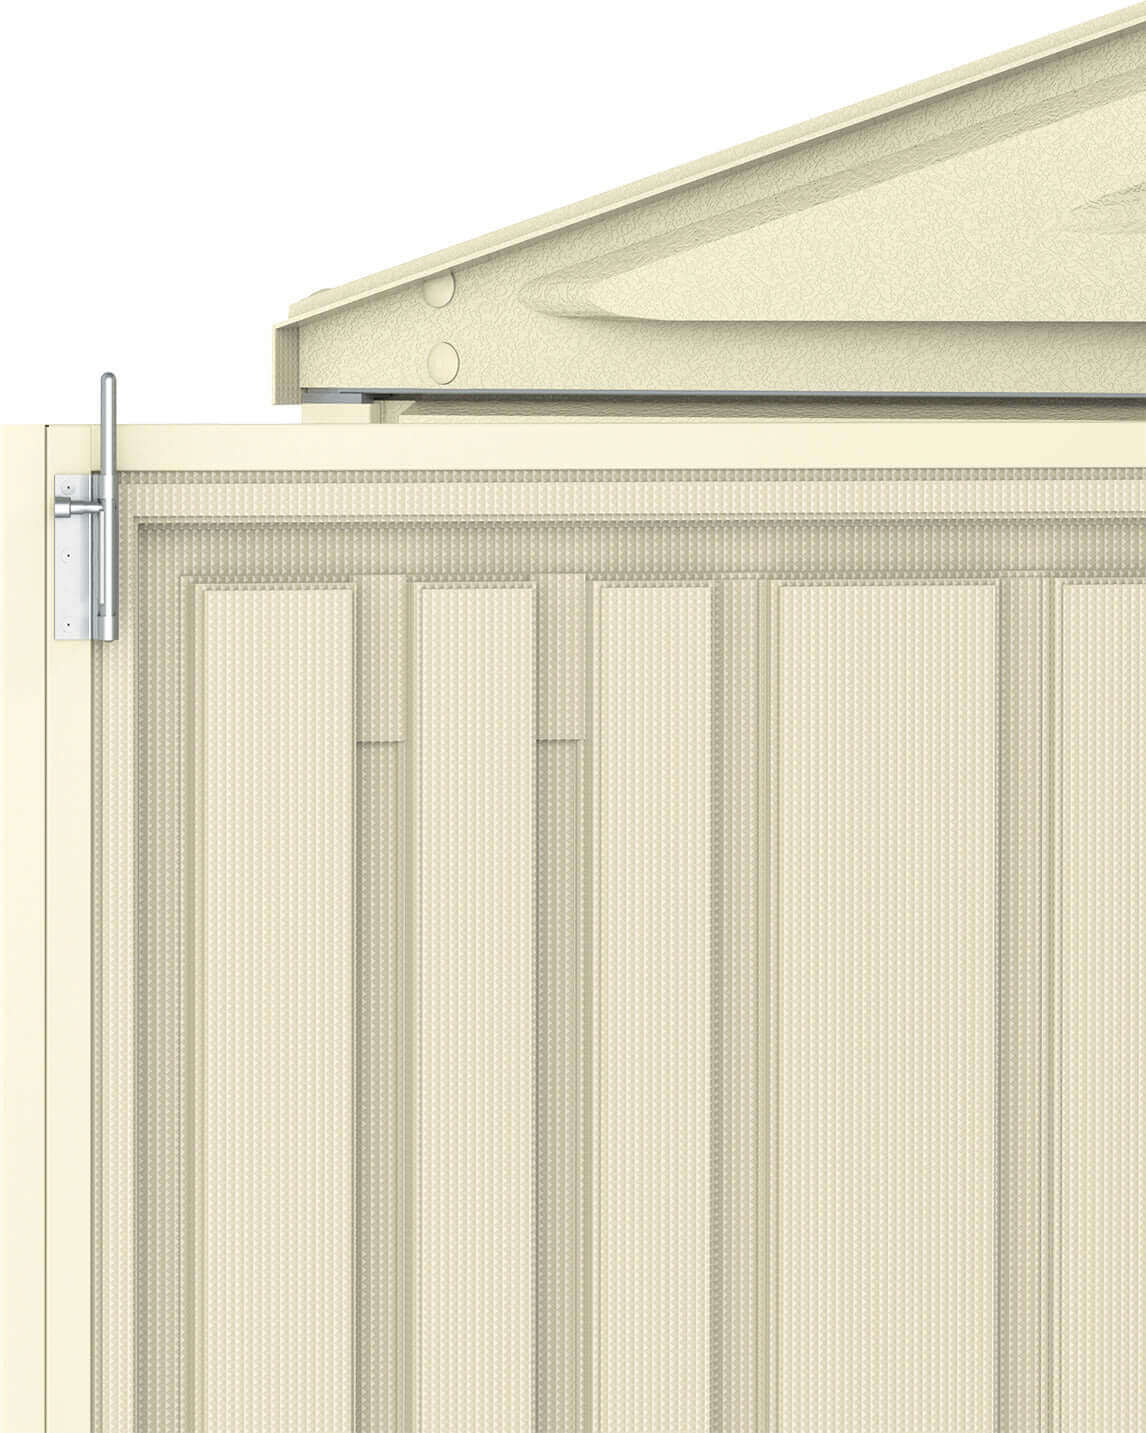 Duramax 10.5' x 5.0' Woodbridge with Foundation 00283 view of corner roof